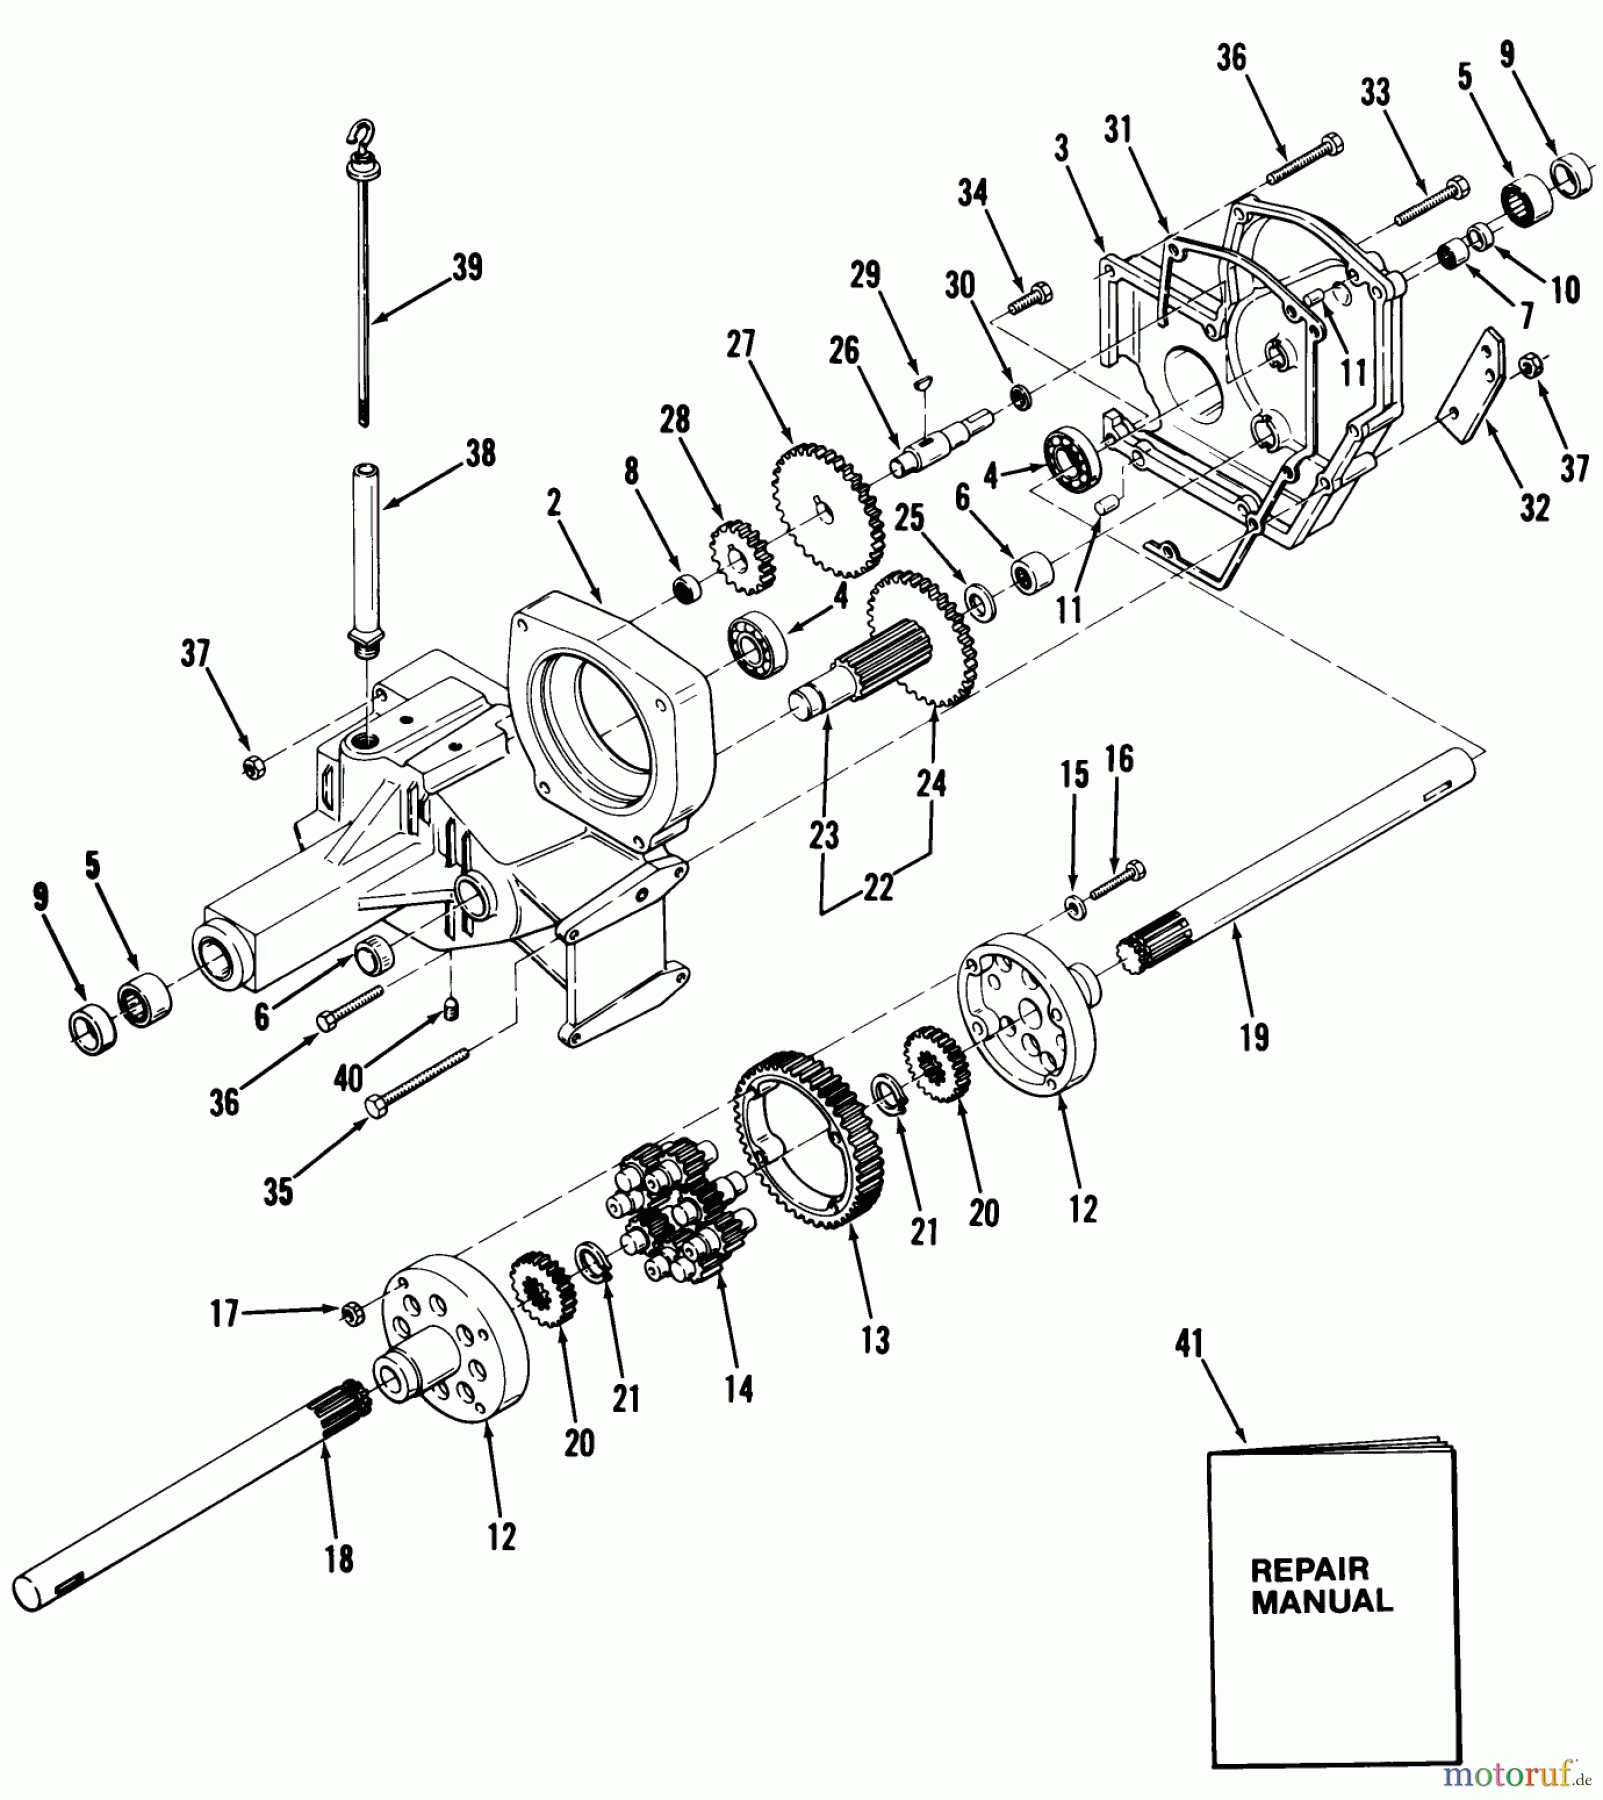  Toro Neu Mowers, Lawn & Garden Tractor Seite 1 01-10K803 (C-105) - Toro C-105 8-Speed Tractor, 1982 TRANSAXLE